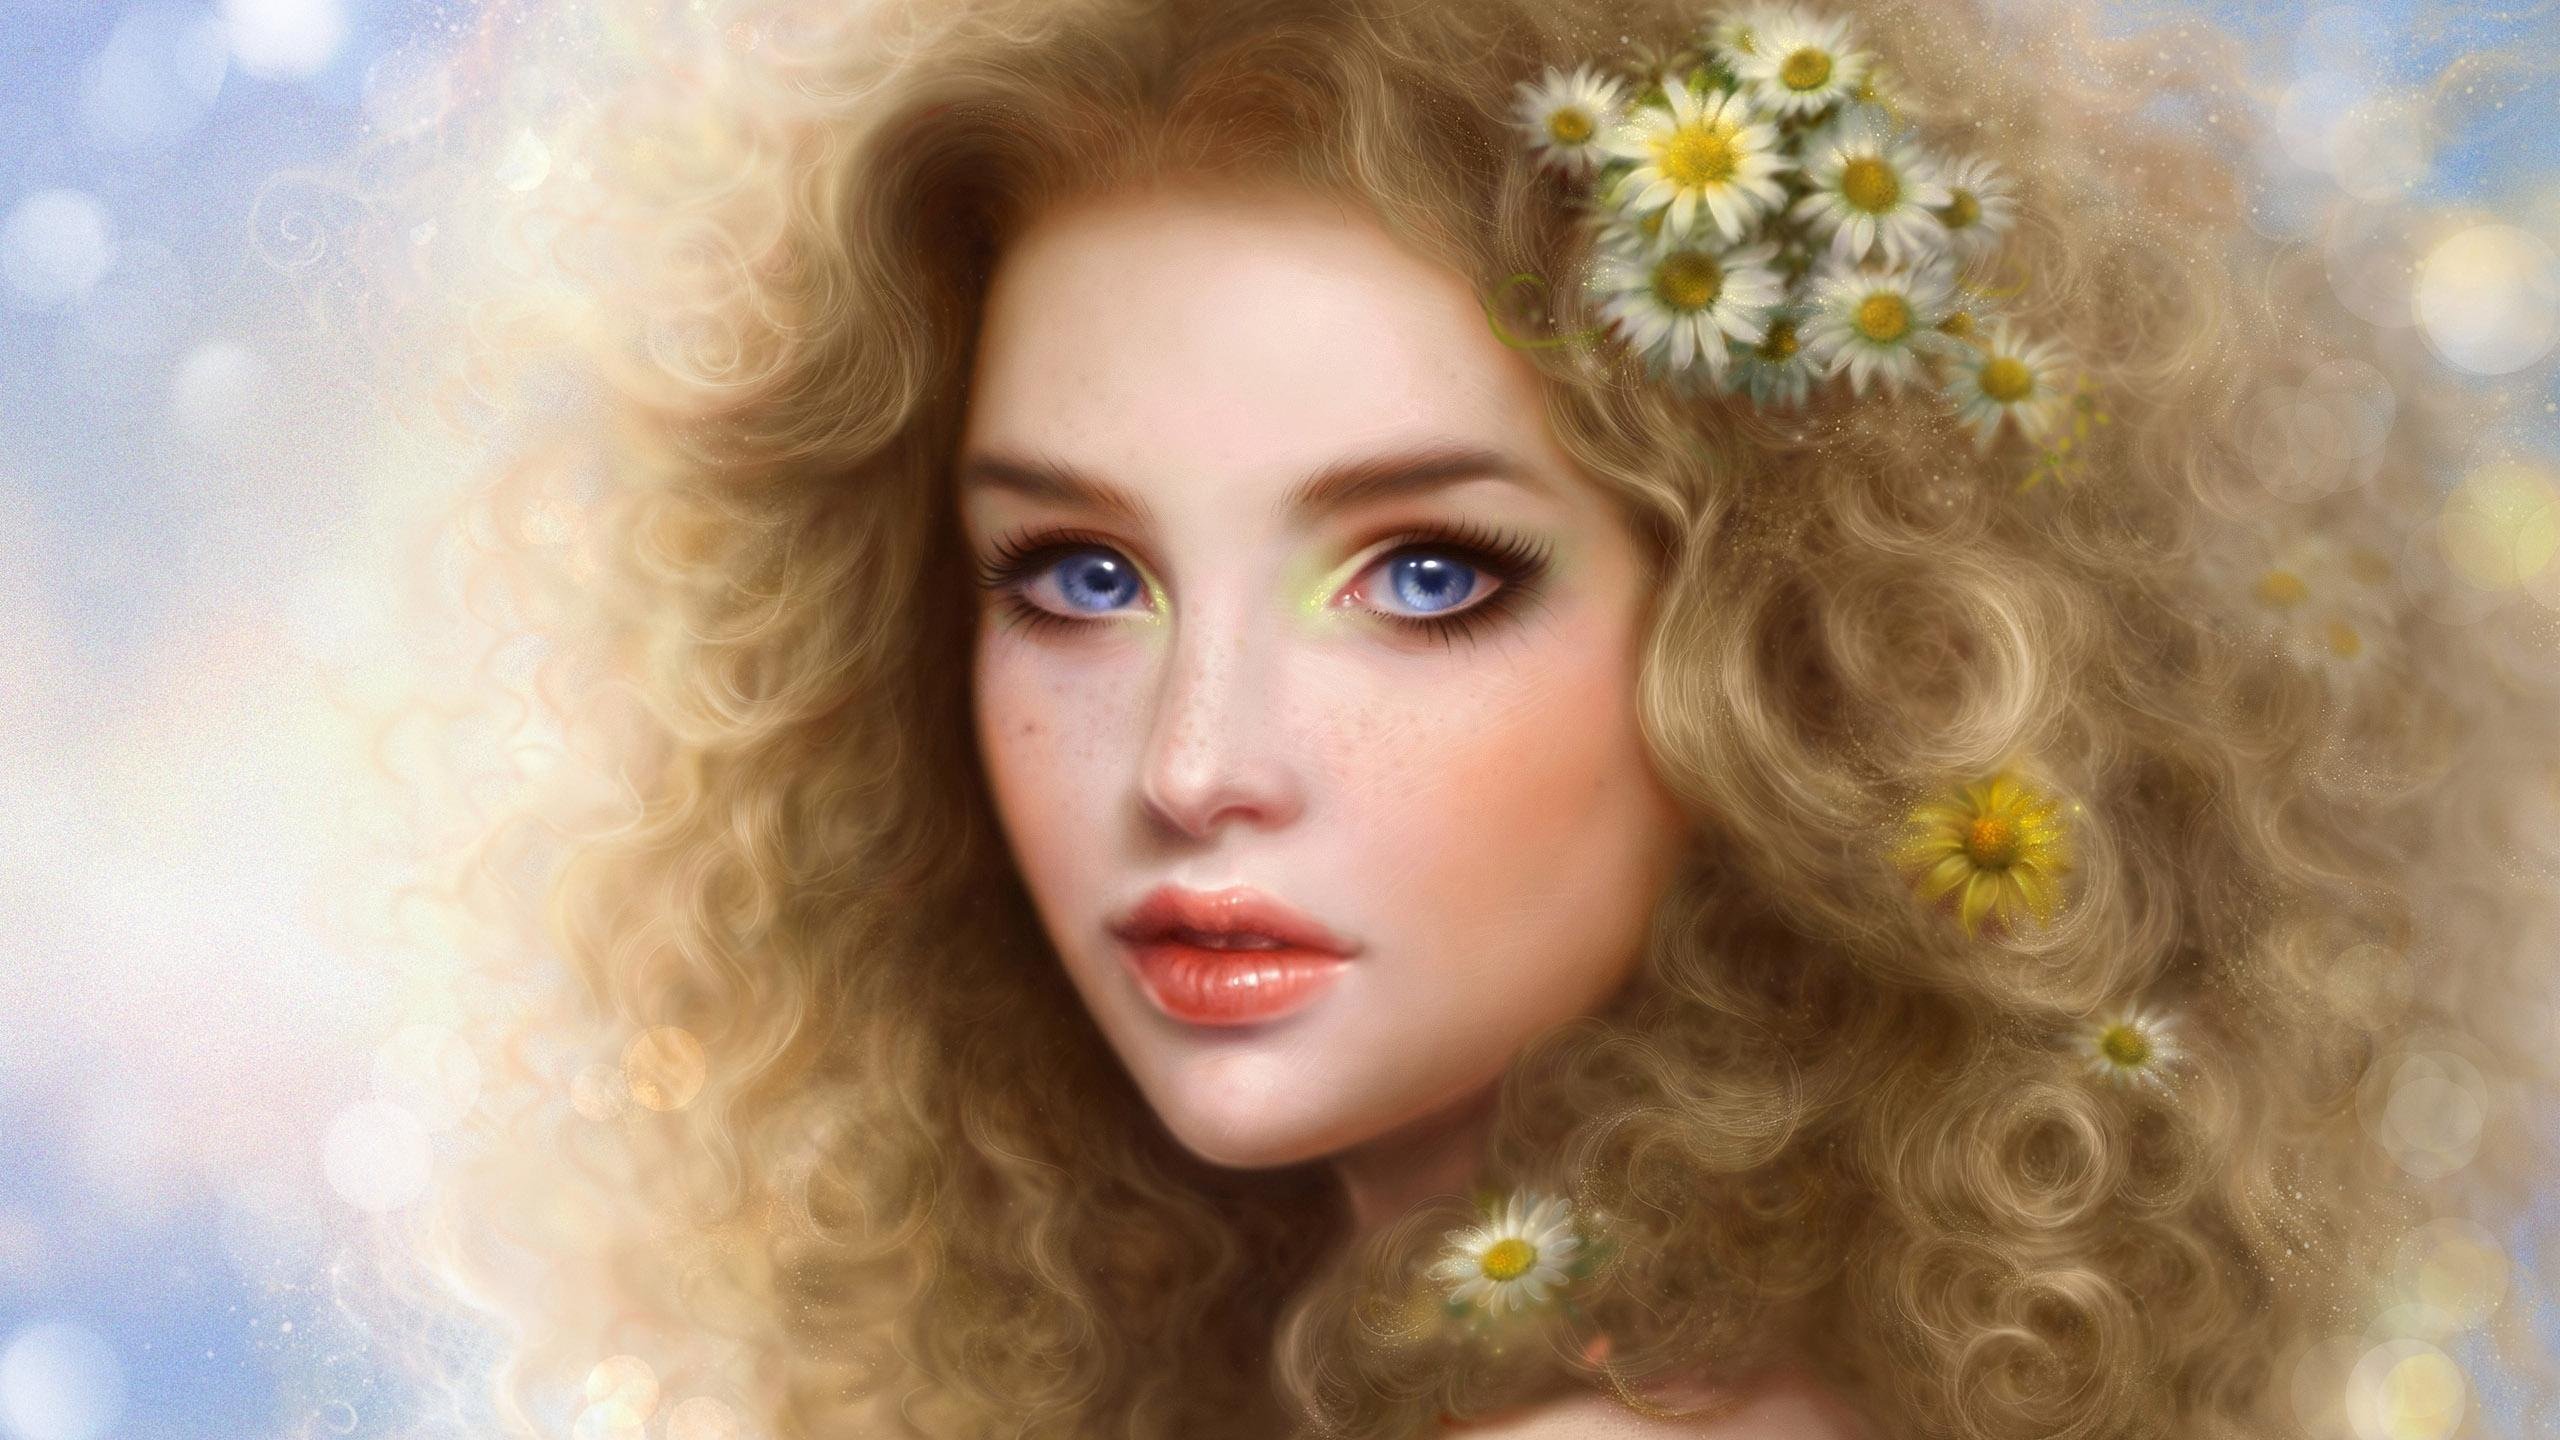 Fantasy Girl With Blonde Hair - HD Wallpaper 